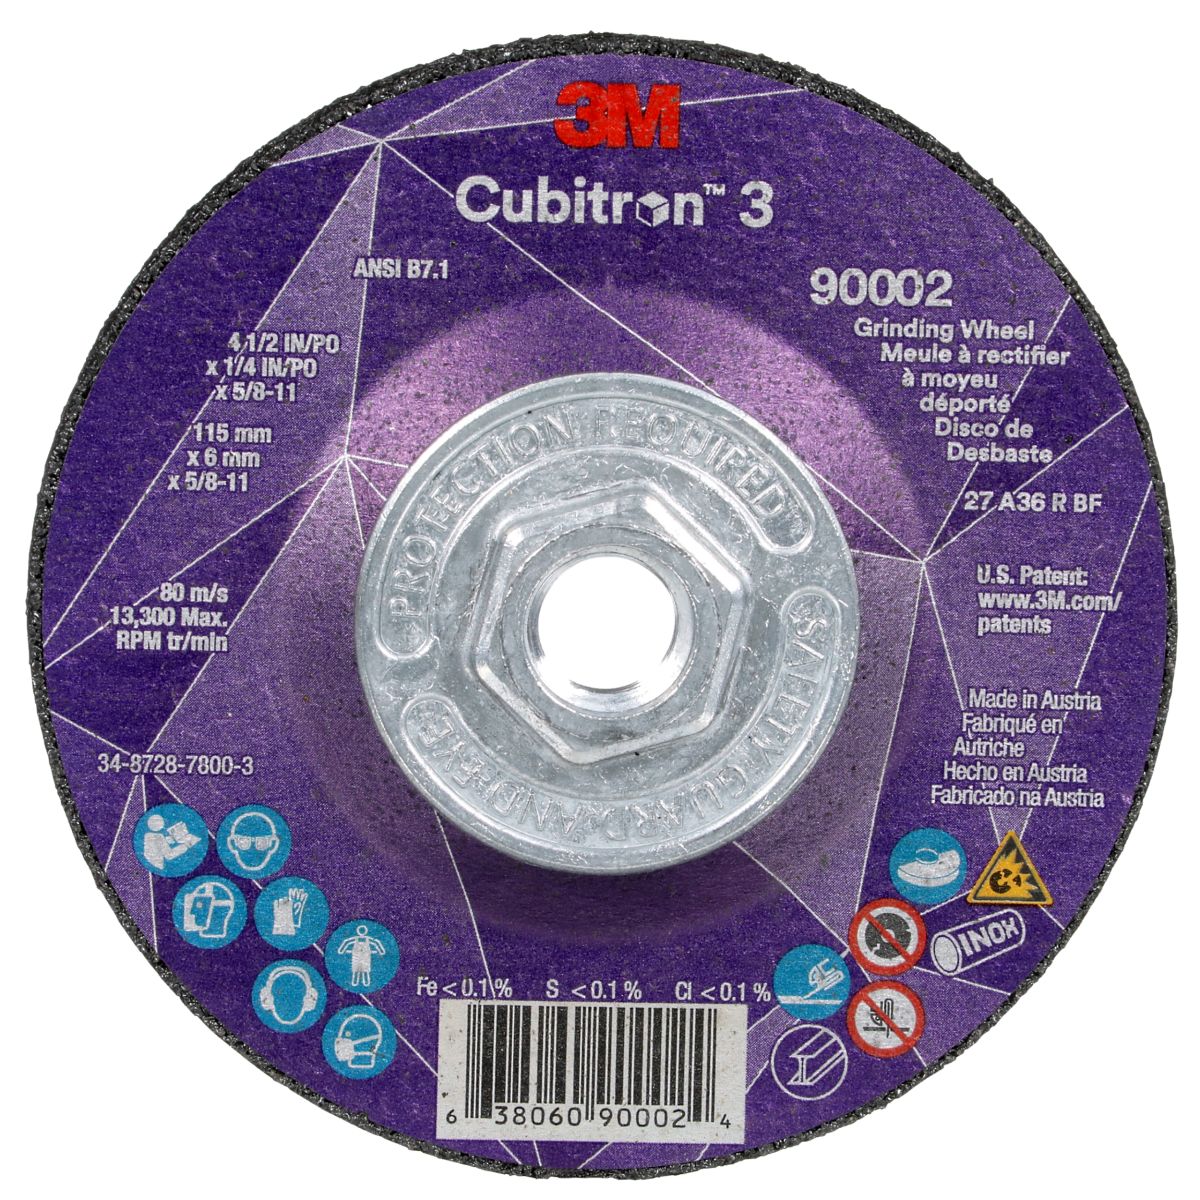 3M™ 90002 4-1/2" x 1/4" x 5/8"-11 Type 27 Grinding Wheel - Cubitron™ 3